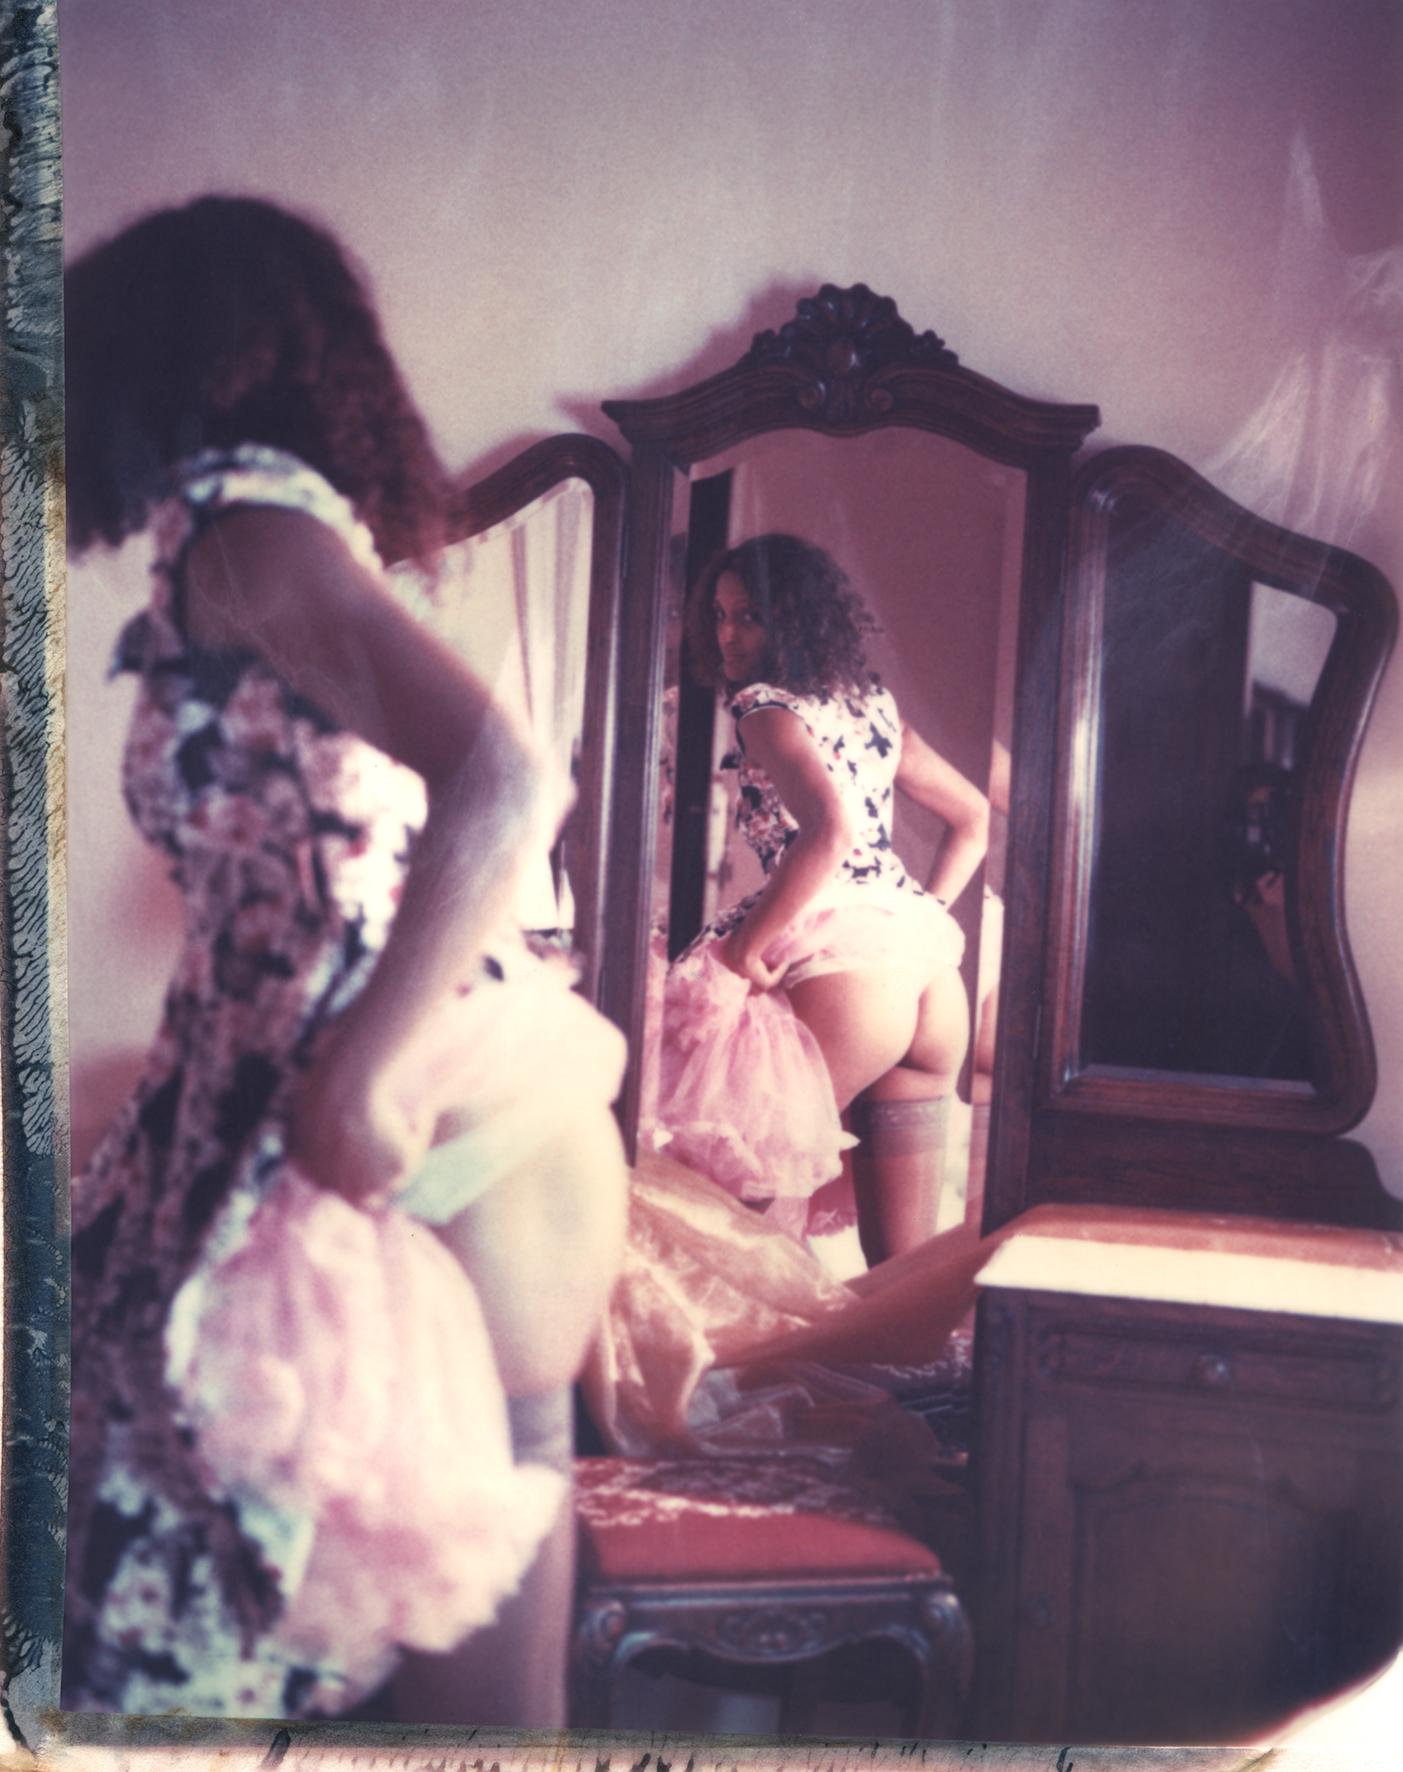 Carmen de Vos Nude Photograph – Oui Mon Cul #20 (40x31cm) - Polaroid, Contemporary, Akt, 21. Jahrhundert